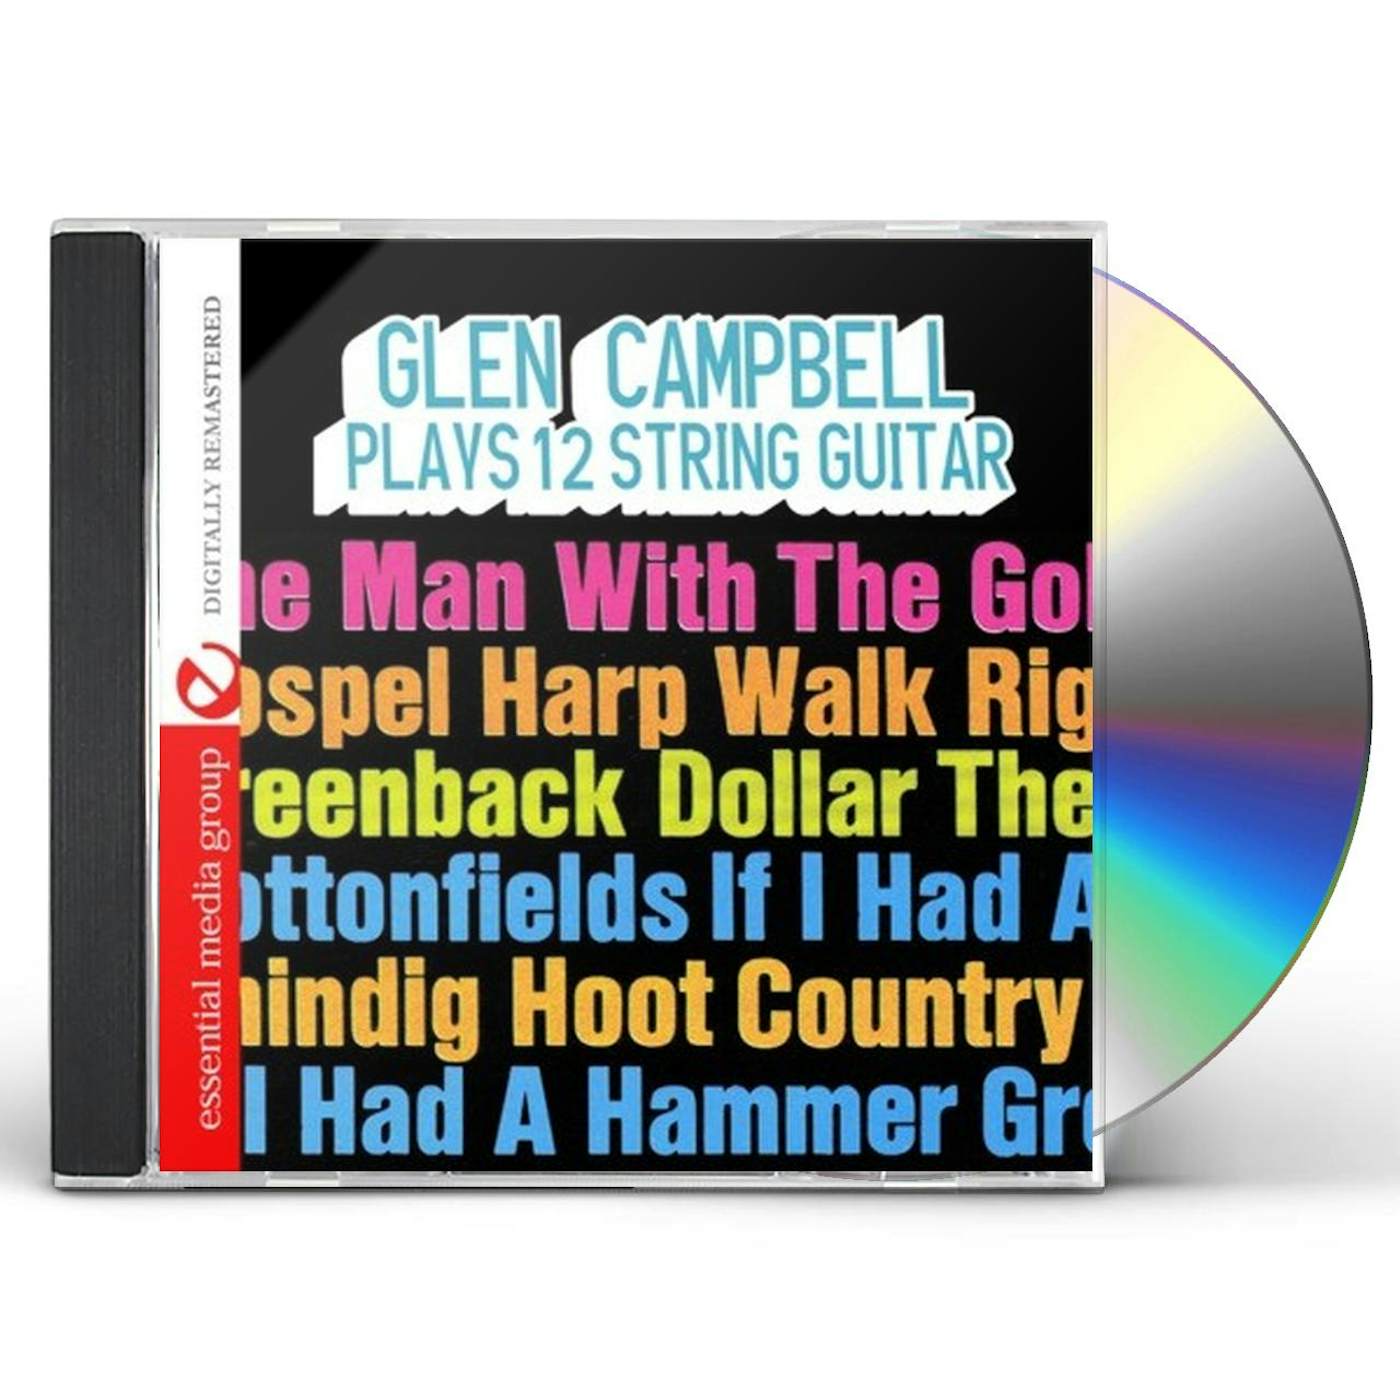 Glen Campbell PLAYS 12 STRING GUITAR CD